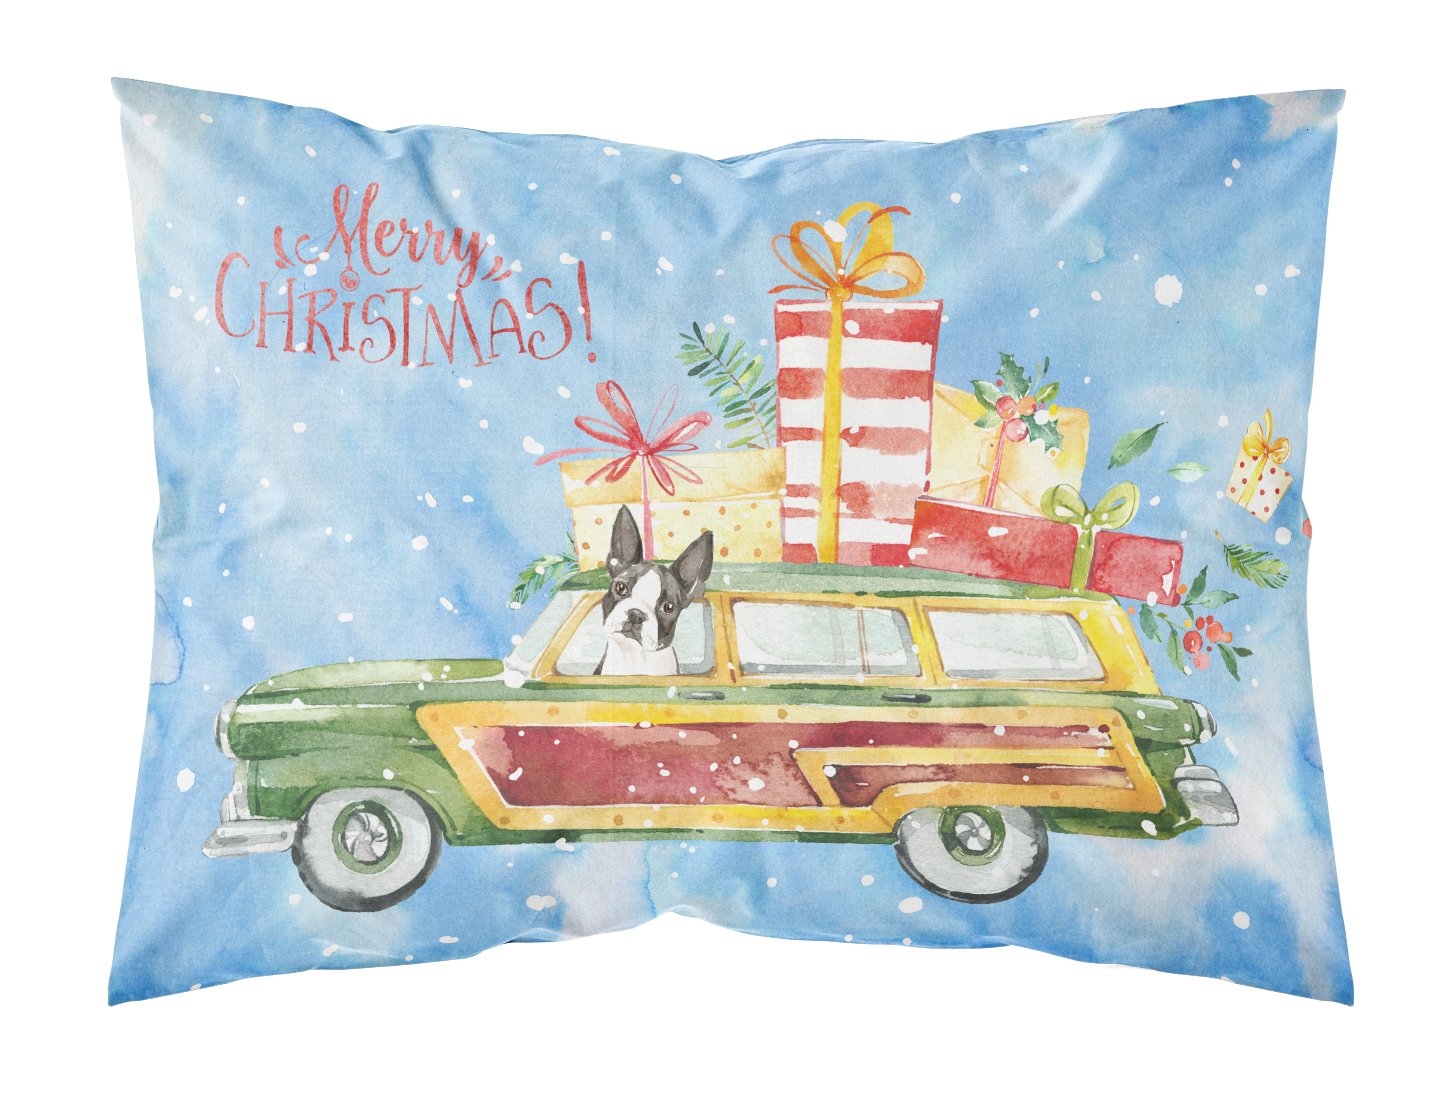 Merry Christmas Boston Terrier Fabric Standard Pillowcase CK2397PILLOWCASE by Caroline's Treasures